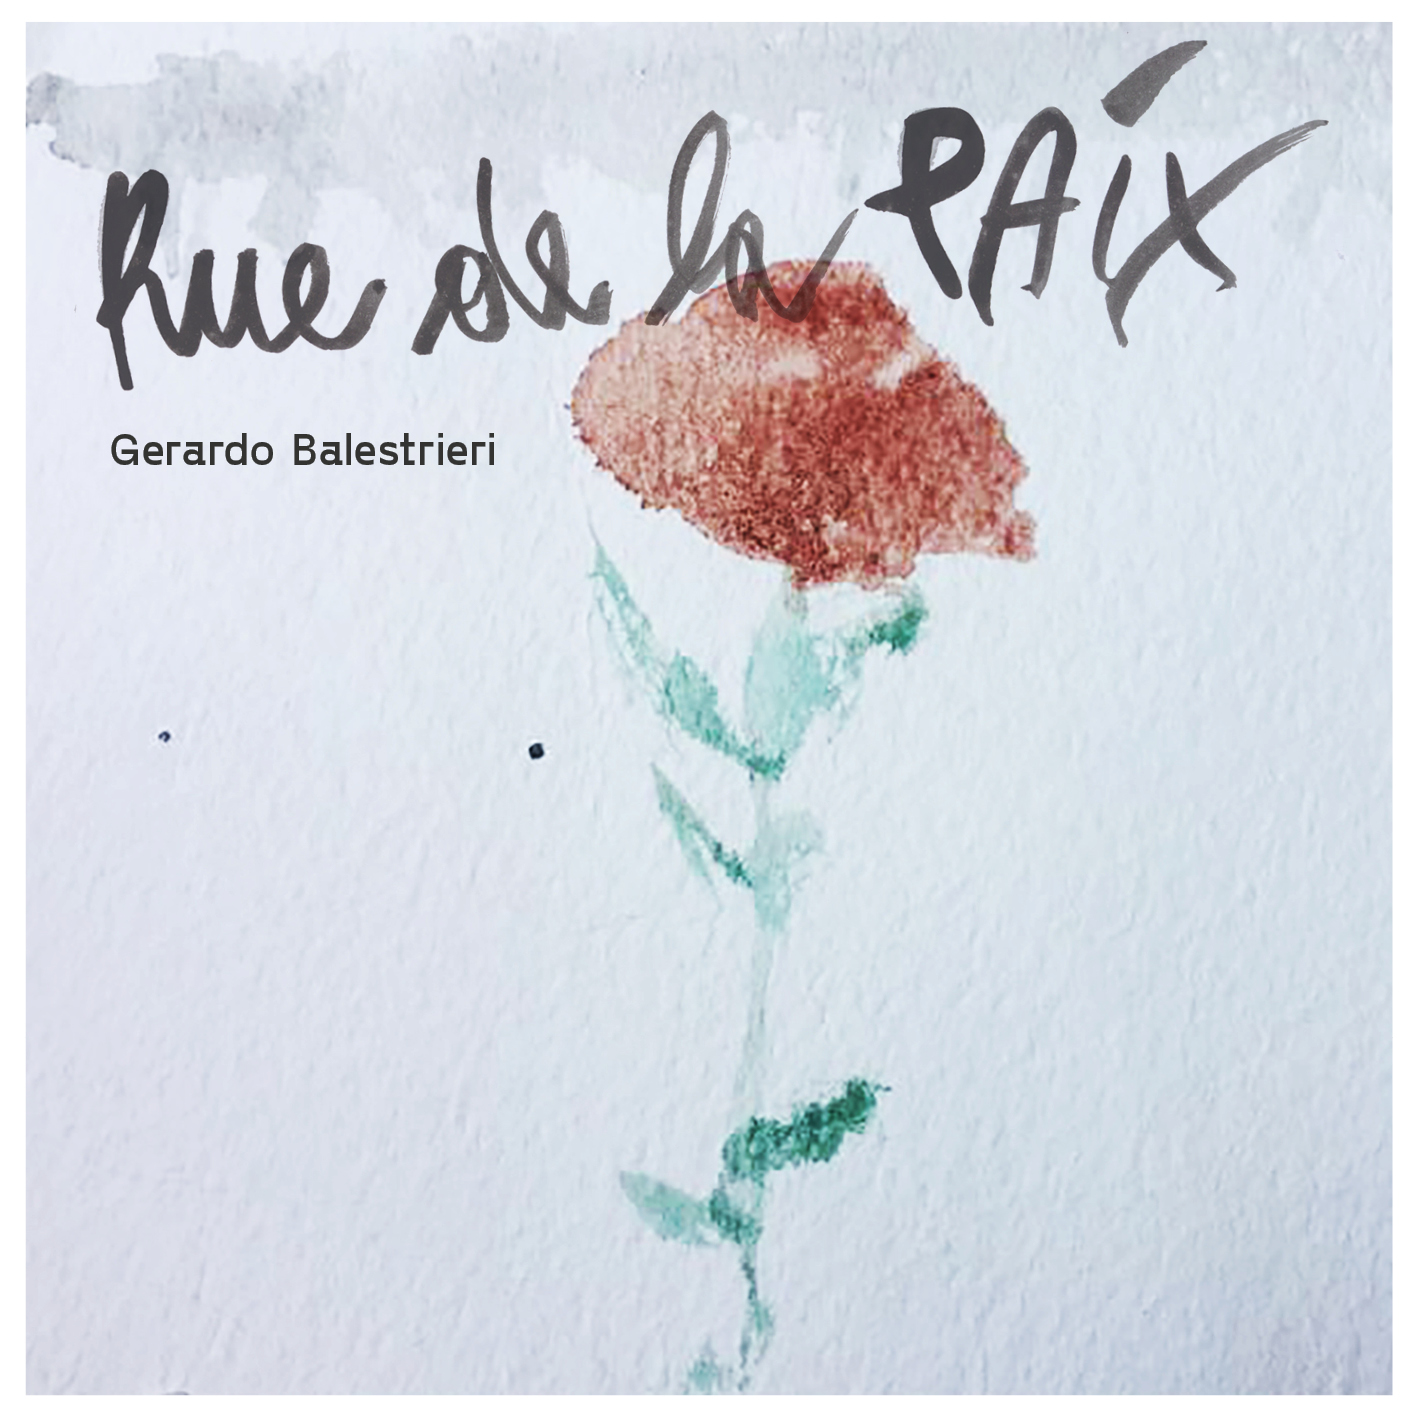 Gerardo Balestrieri "Rue de la Paix"
Il nuovo album 2021